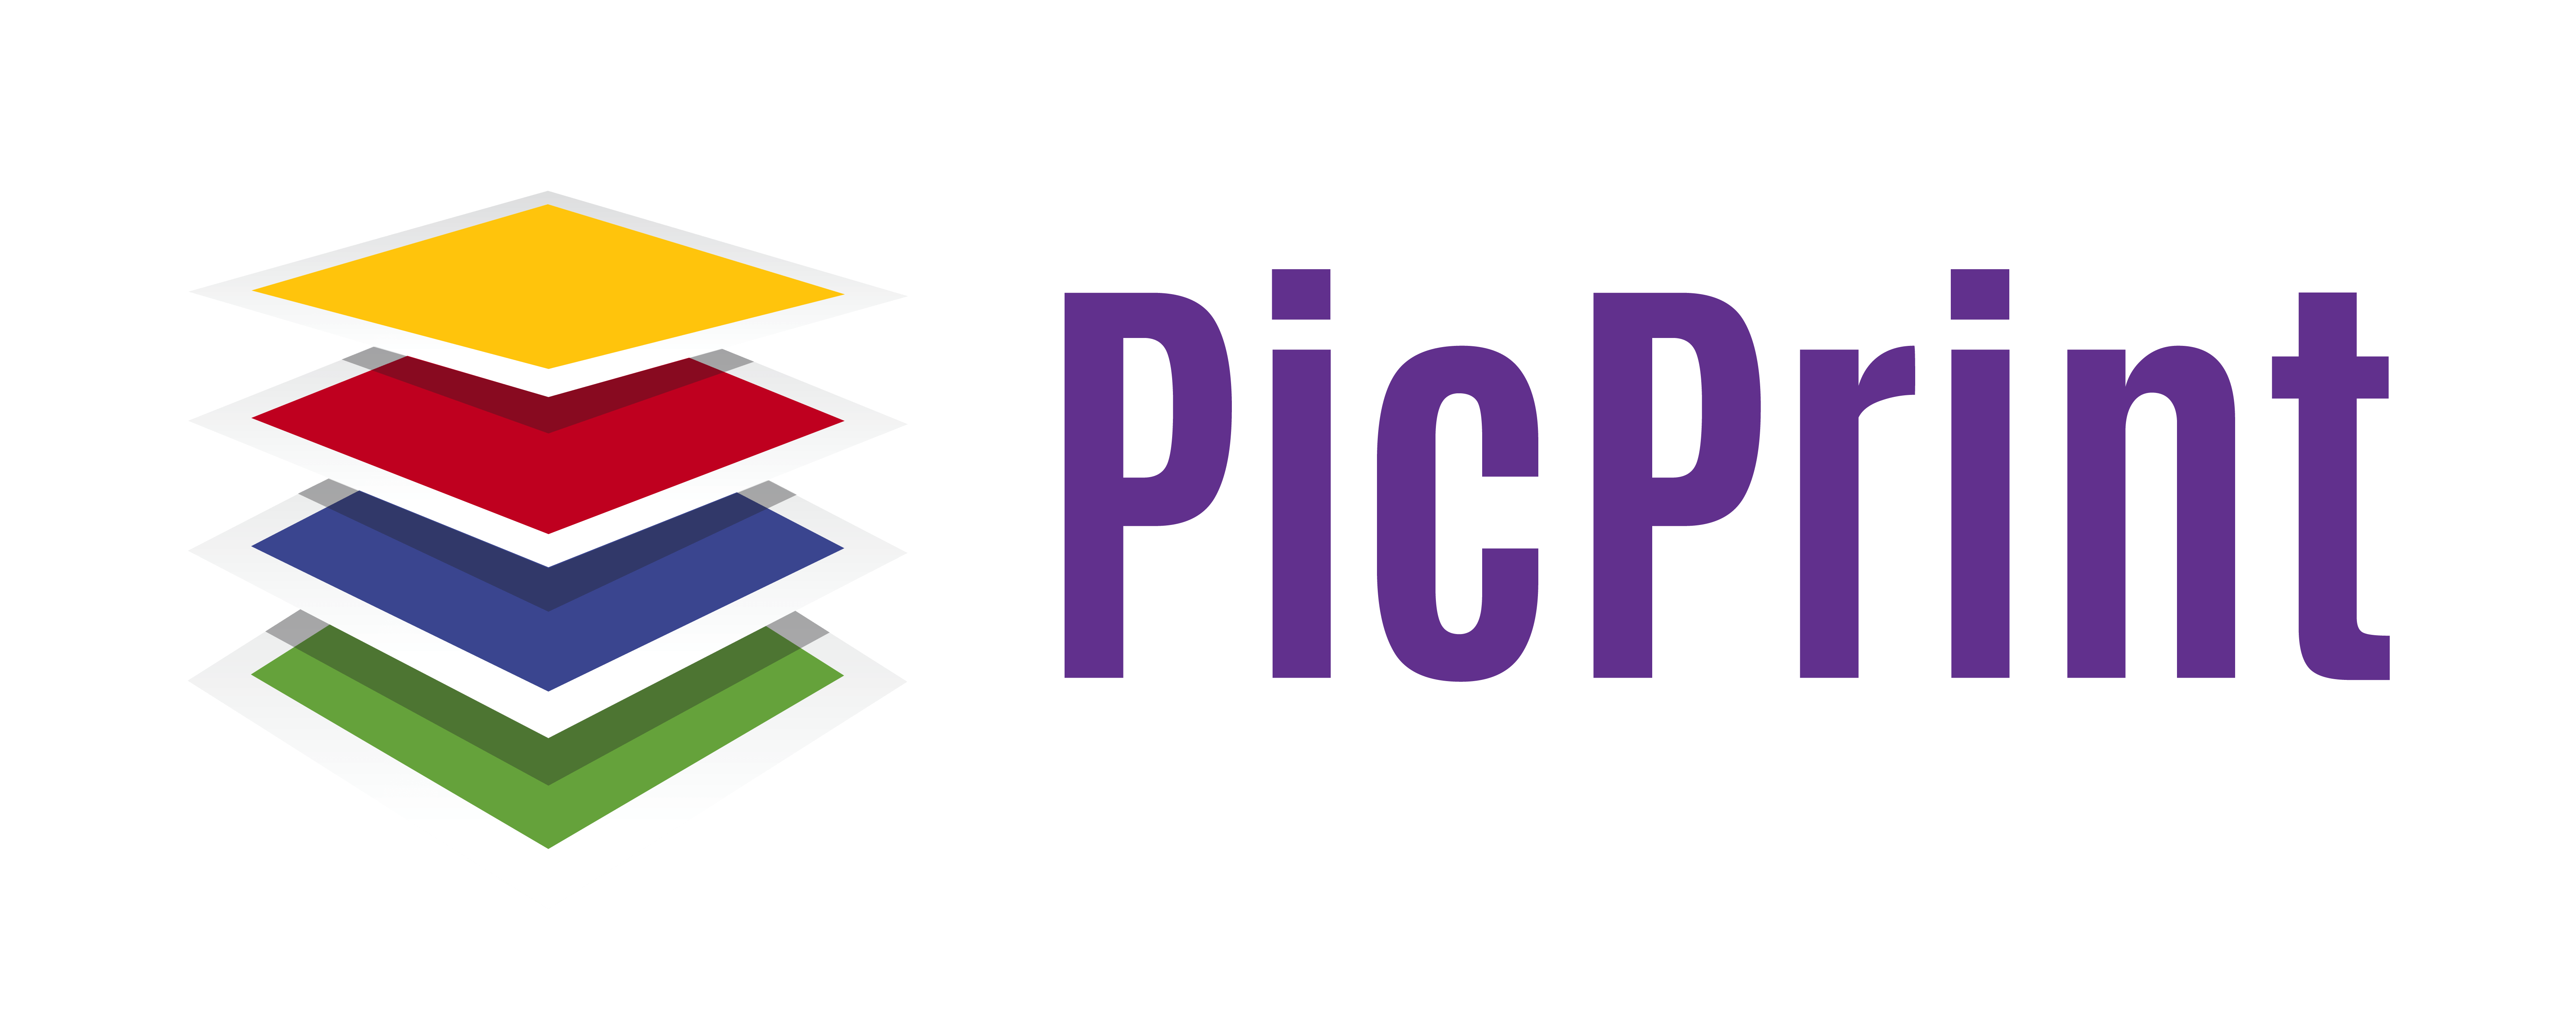 PicPrint Logo